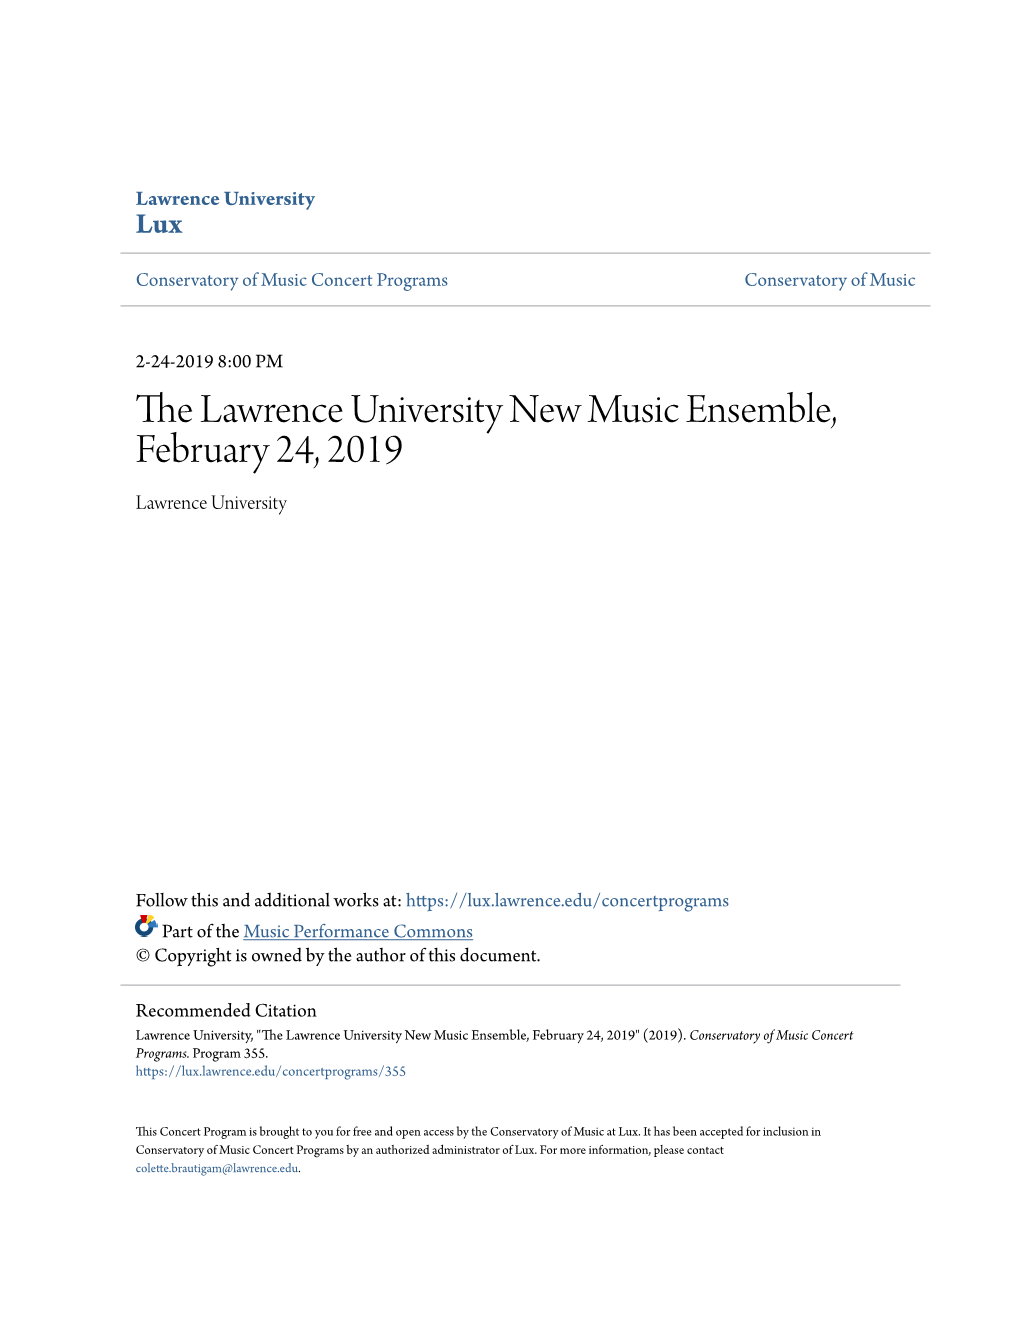 The Lawrence University New Music Ensemble, February 24, 2019 Lawrence University